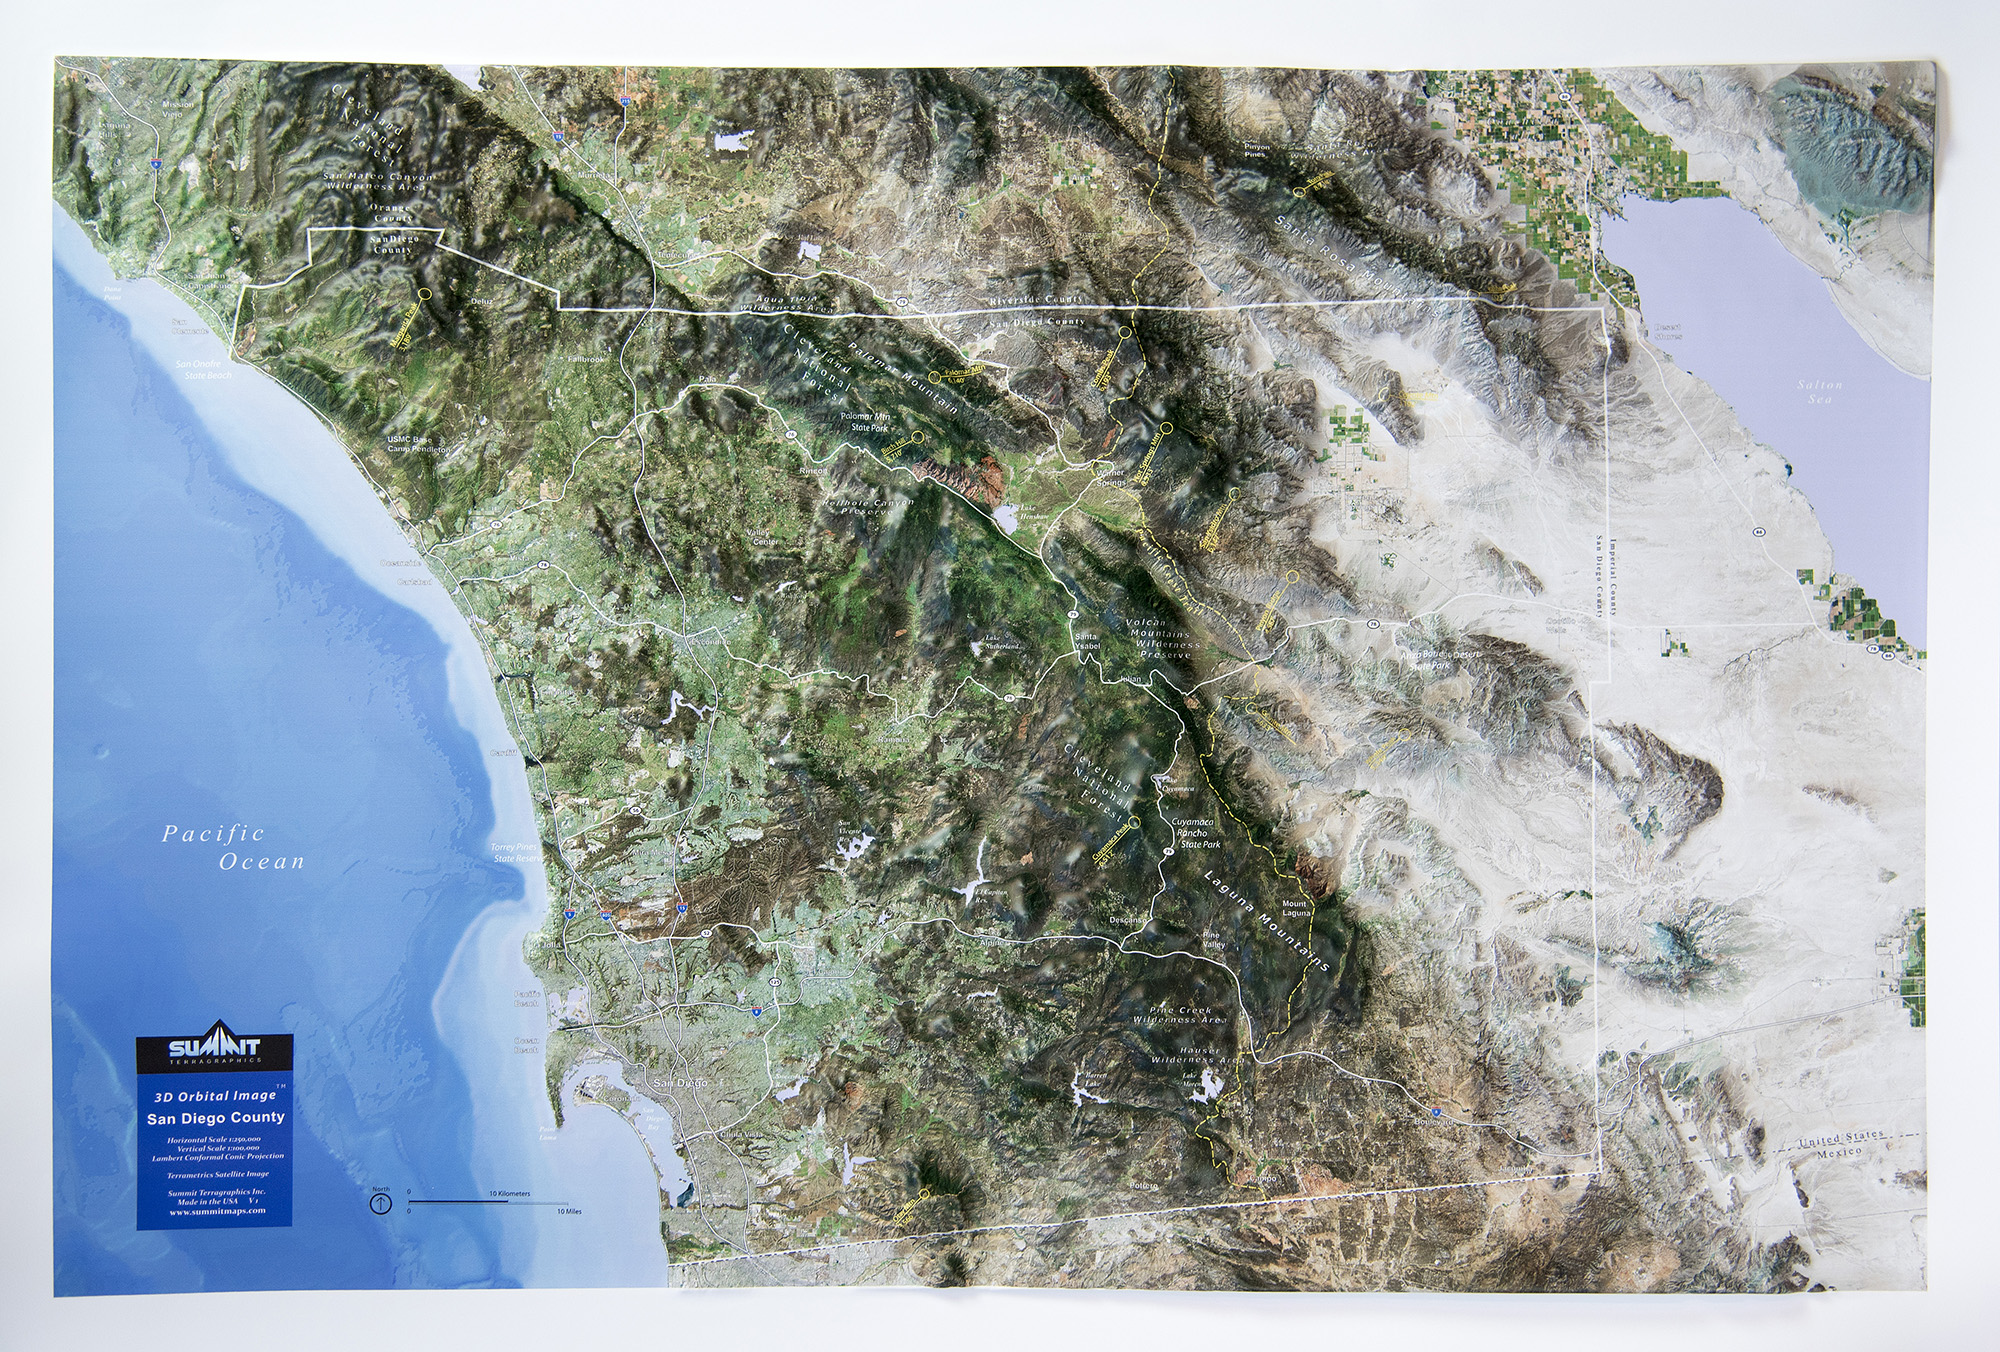 San Diego County Orbital Image DSC 2515 2 